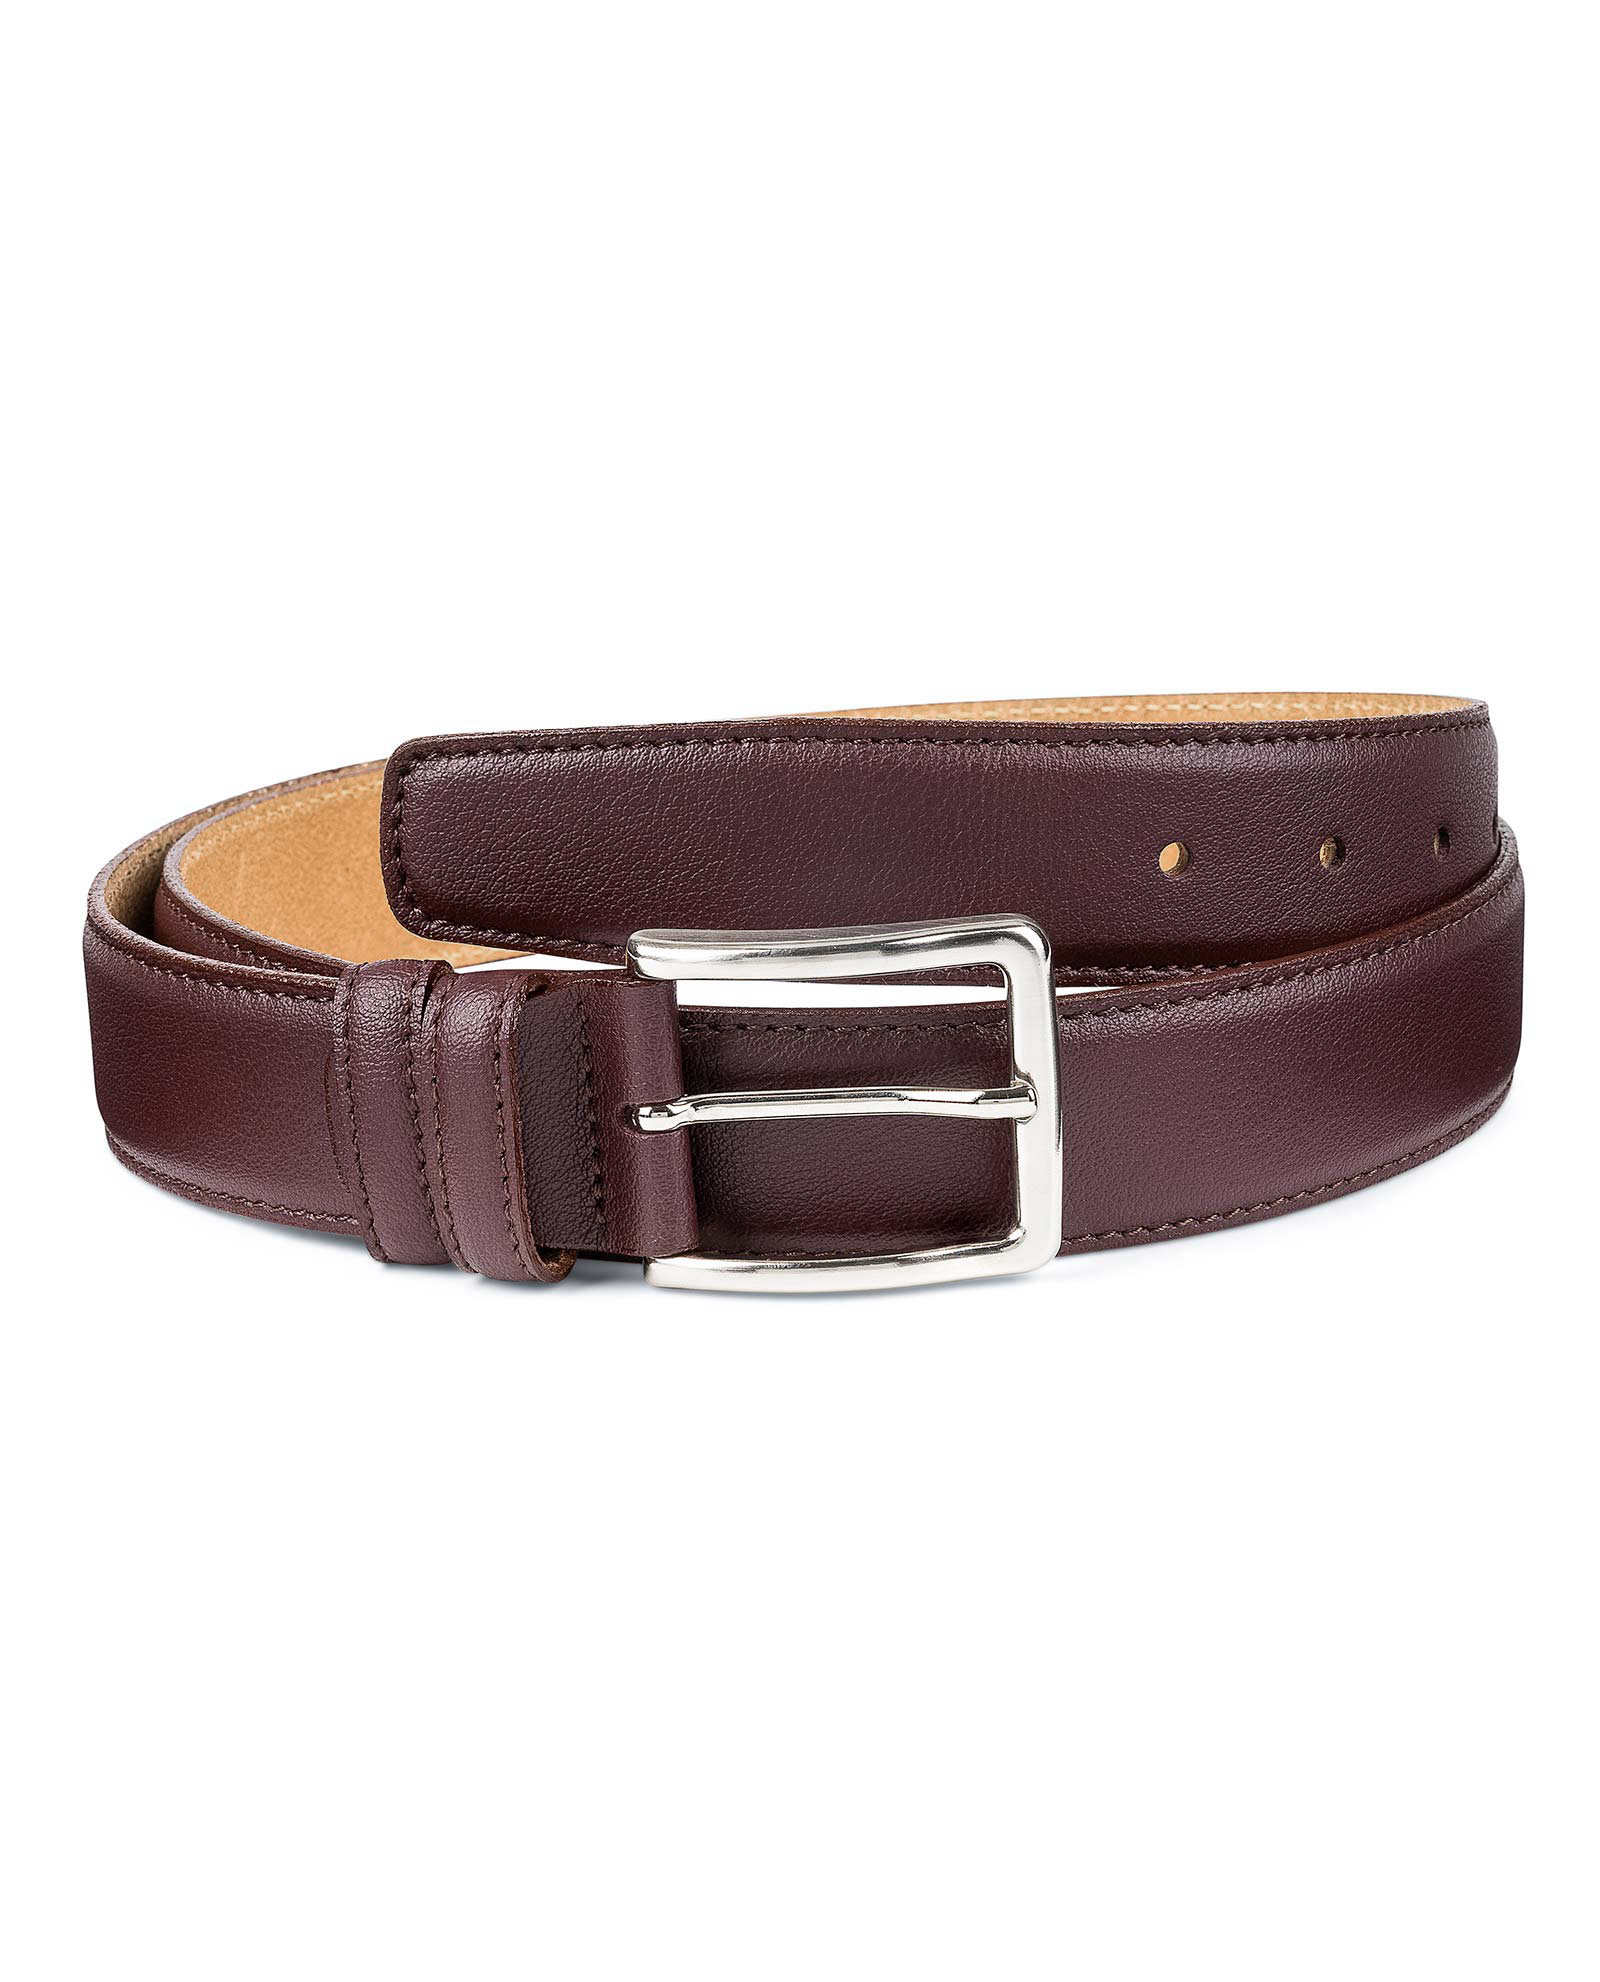 Buy Mens Burgundy Leather Belt | 0 | Free Shipping